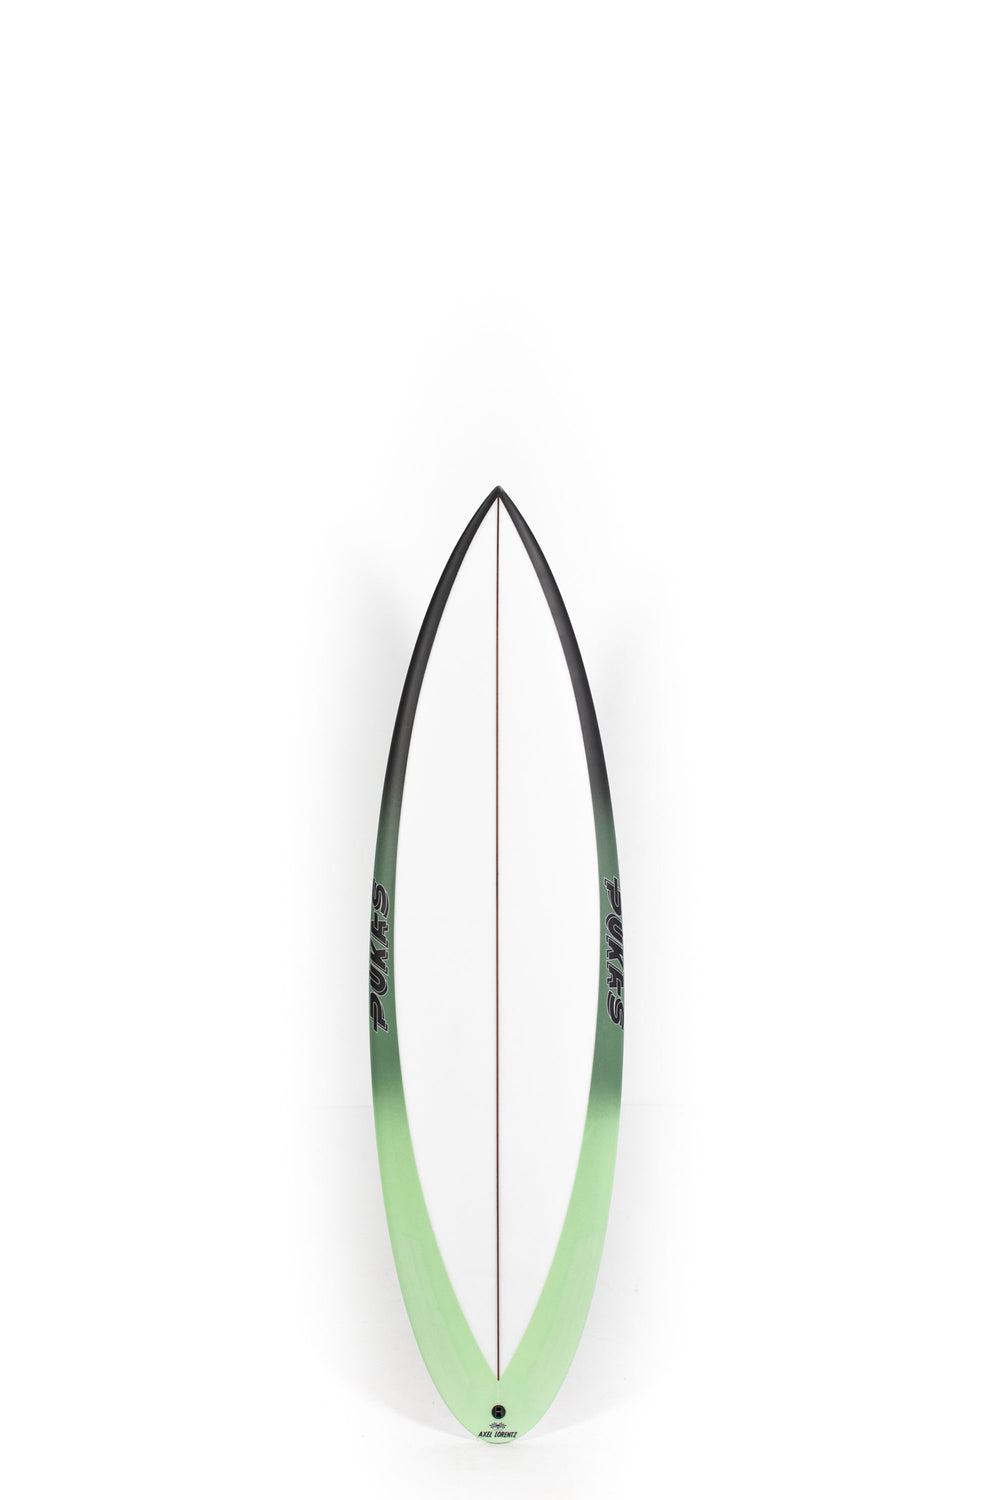 Pukas Surf Shop - Pukas Surfboard - TASTY TREAT ALL ROUND by Axel Lorentz - 6'0